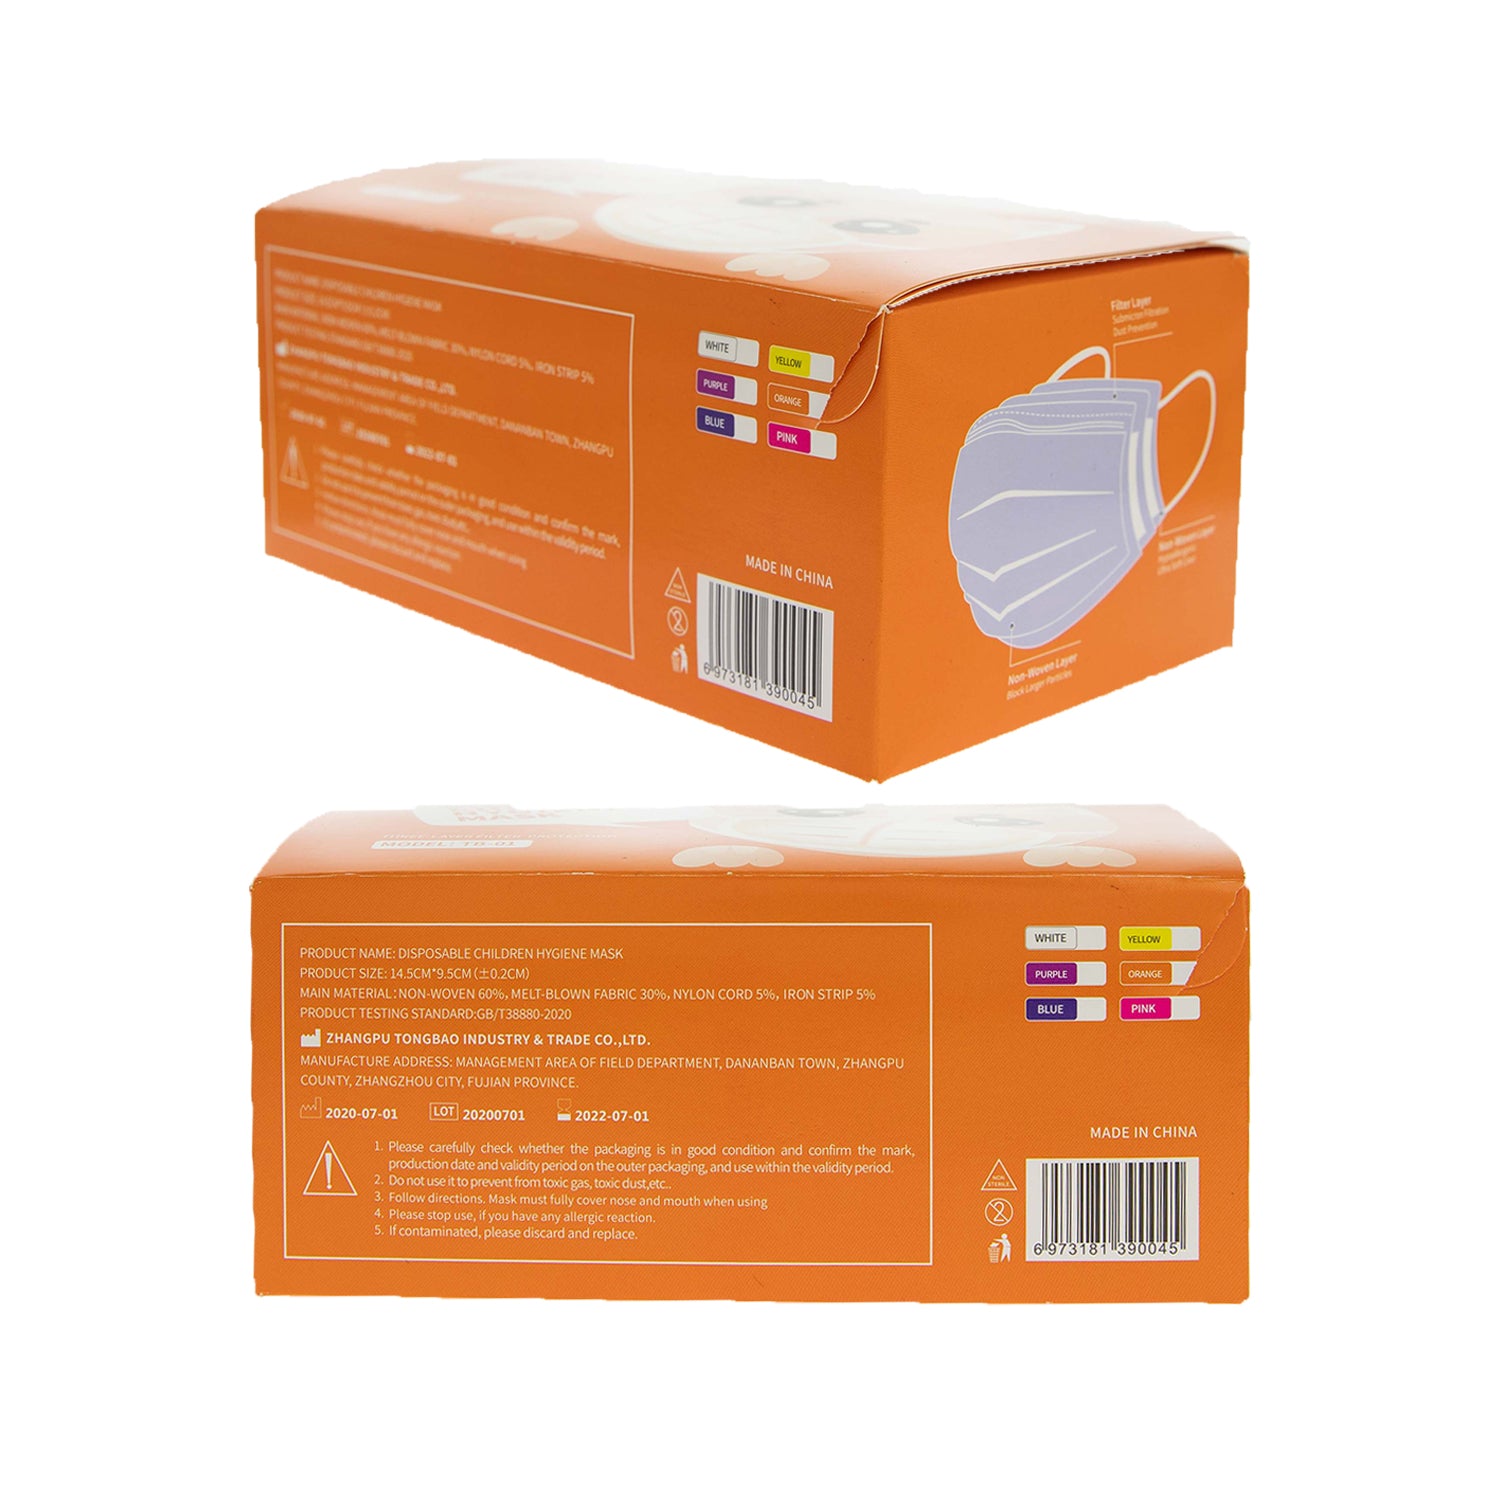 3-Ply Disposable Children Hygiene Mask, Kids Mask, 50 PCS - BOX-eSafety Supplies, Inc